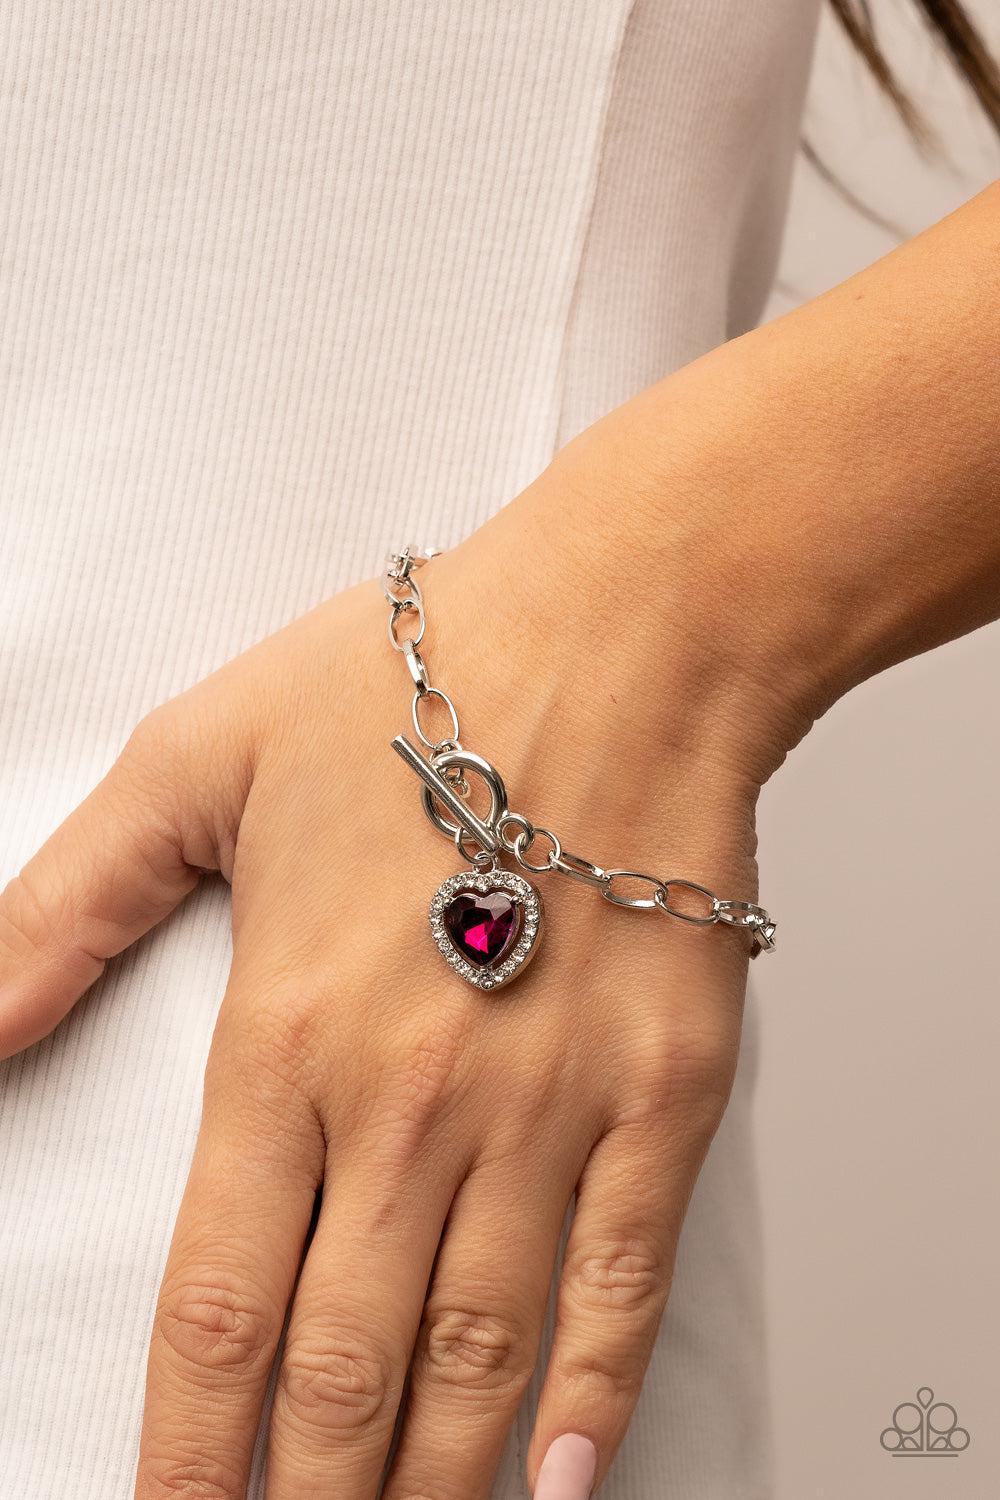 Till DAZZLE Do Us Part Pink Rhinestone Heart Bracelet - Paparazzi Accessories- lightbox - CarasShop.com - $5 Jewelry by Cara Jewels